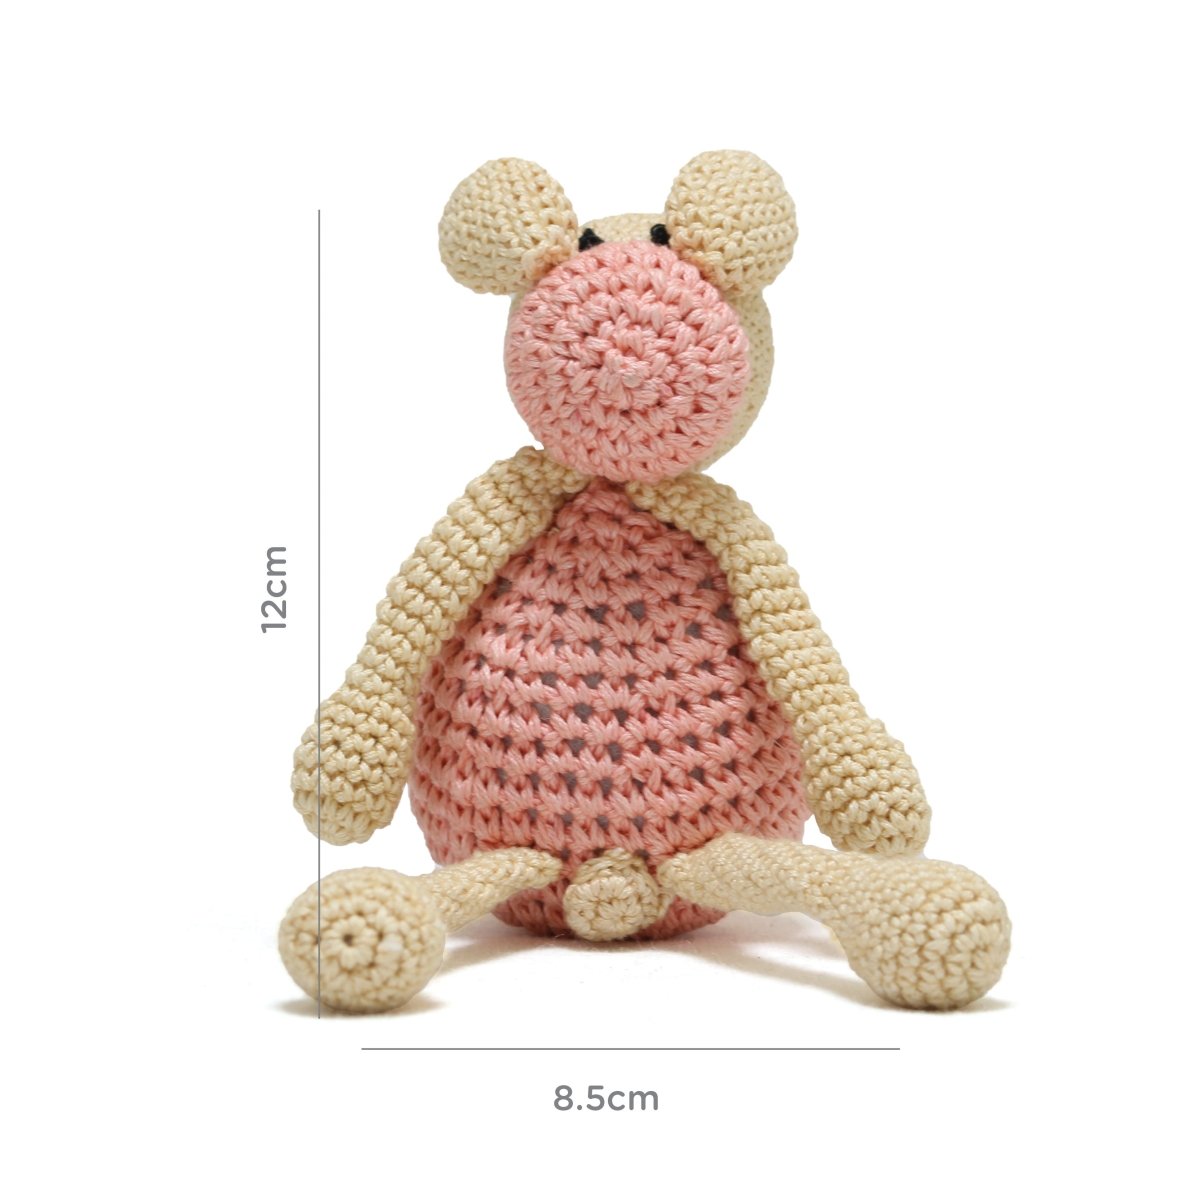 Nuluv-Happy Threads Amigurumi Soft Toy- Cheerful Sheep - STPES400